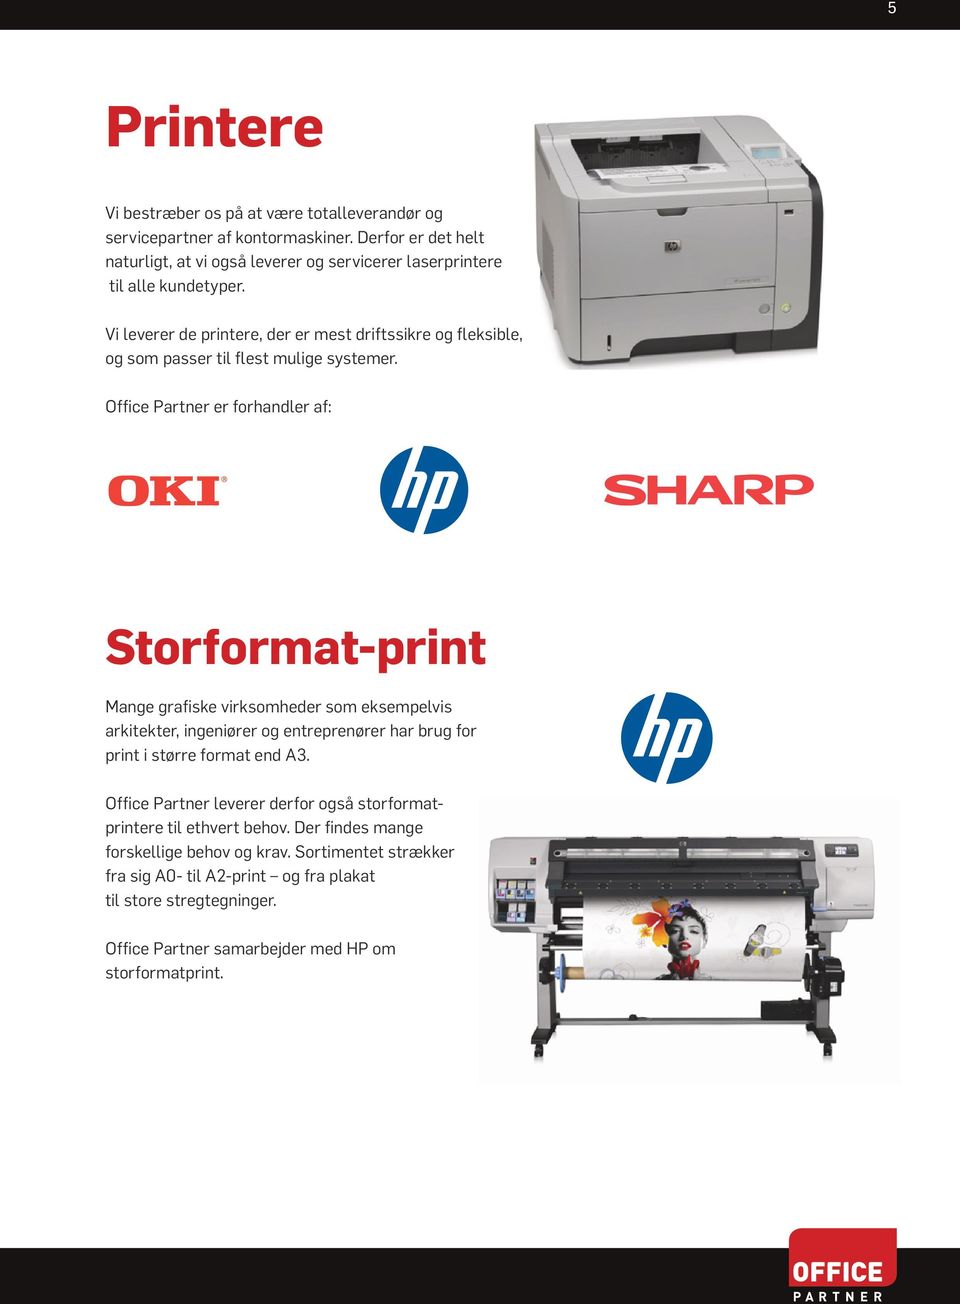 Vi leverer de printere, der er mest driftssikre og fleksible, og som passer til flest mulige systemer.